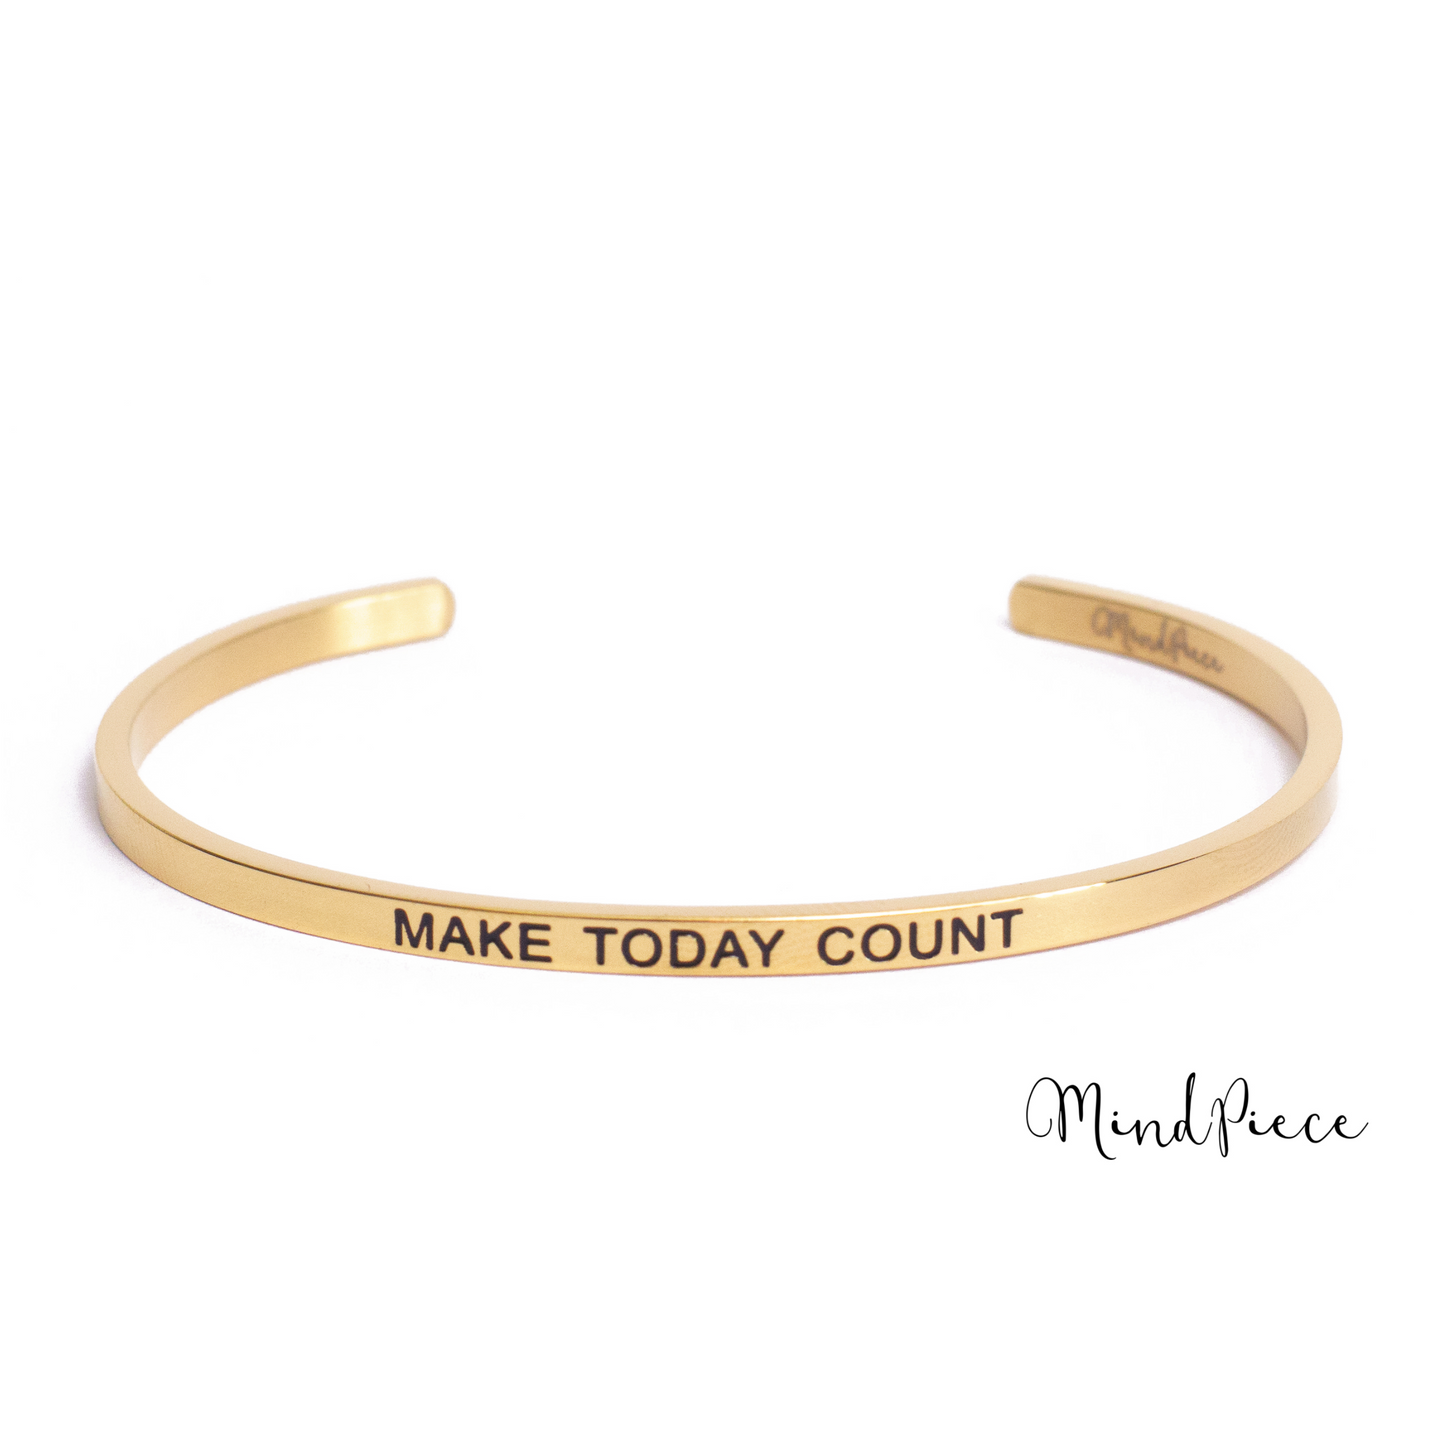 Quote Bracelet - Make today count (1 pcs)